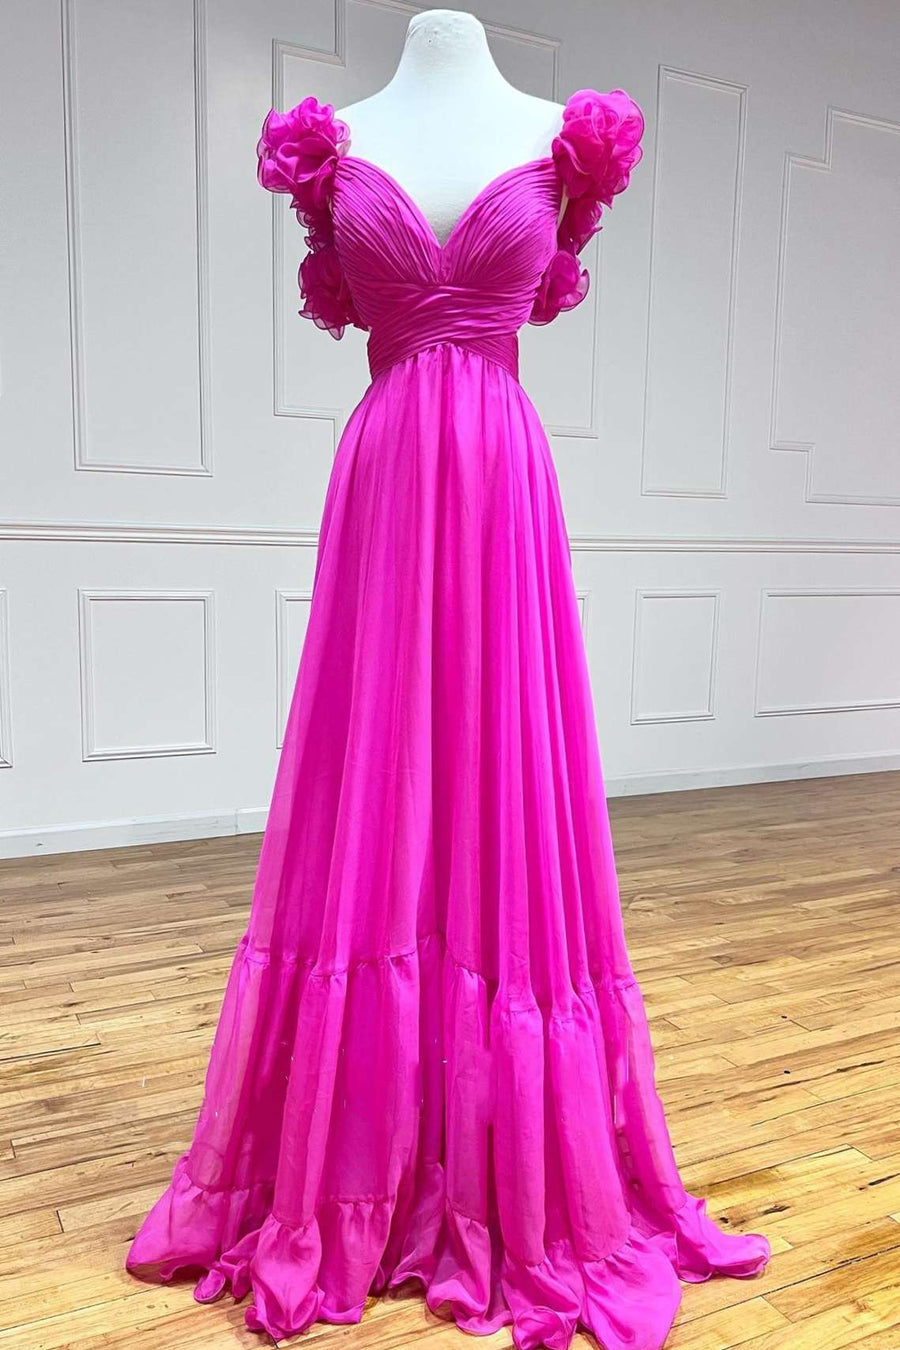 Lace-Up Fuchsia V-Neck Ruffle Pleated Long Prom Dress